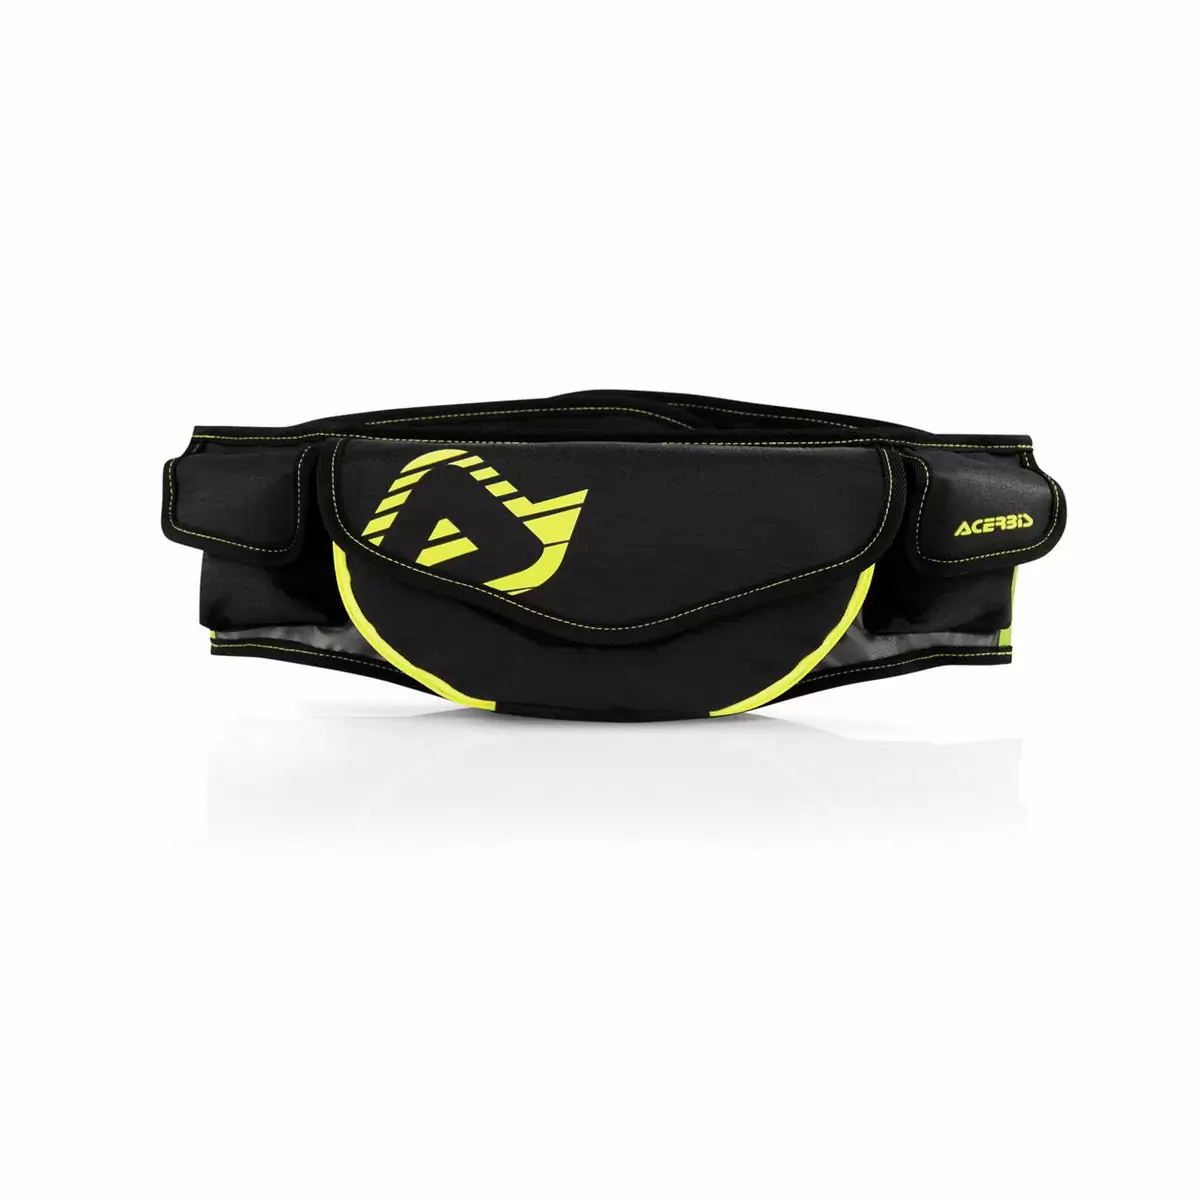 Waist bag ram black/yellow - image